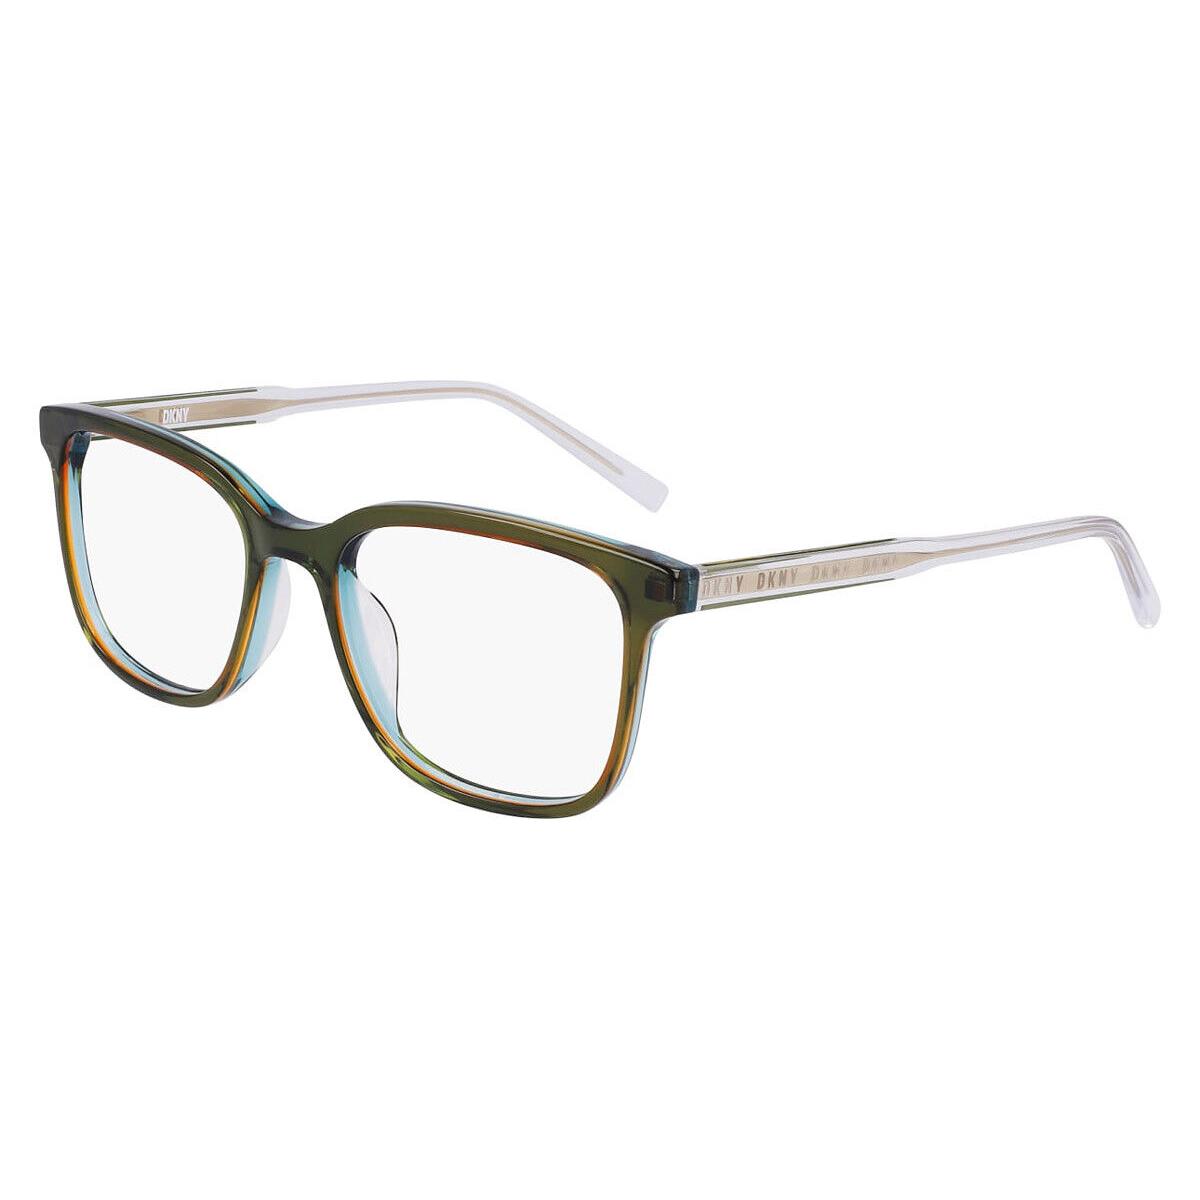 Dkny DK5065 Eyeglasses Women Crystal Cargo Laminate 52mm